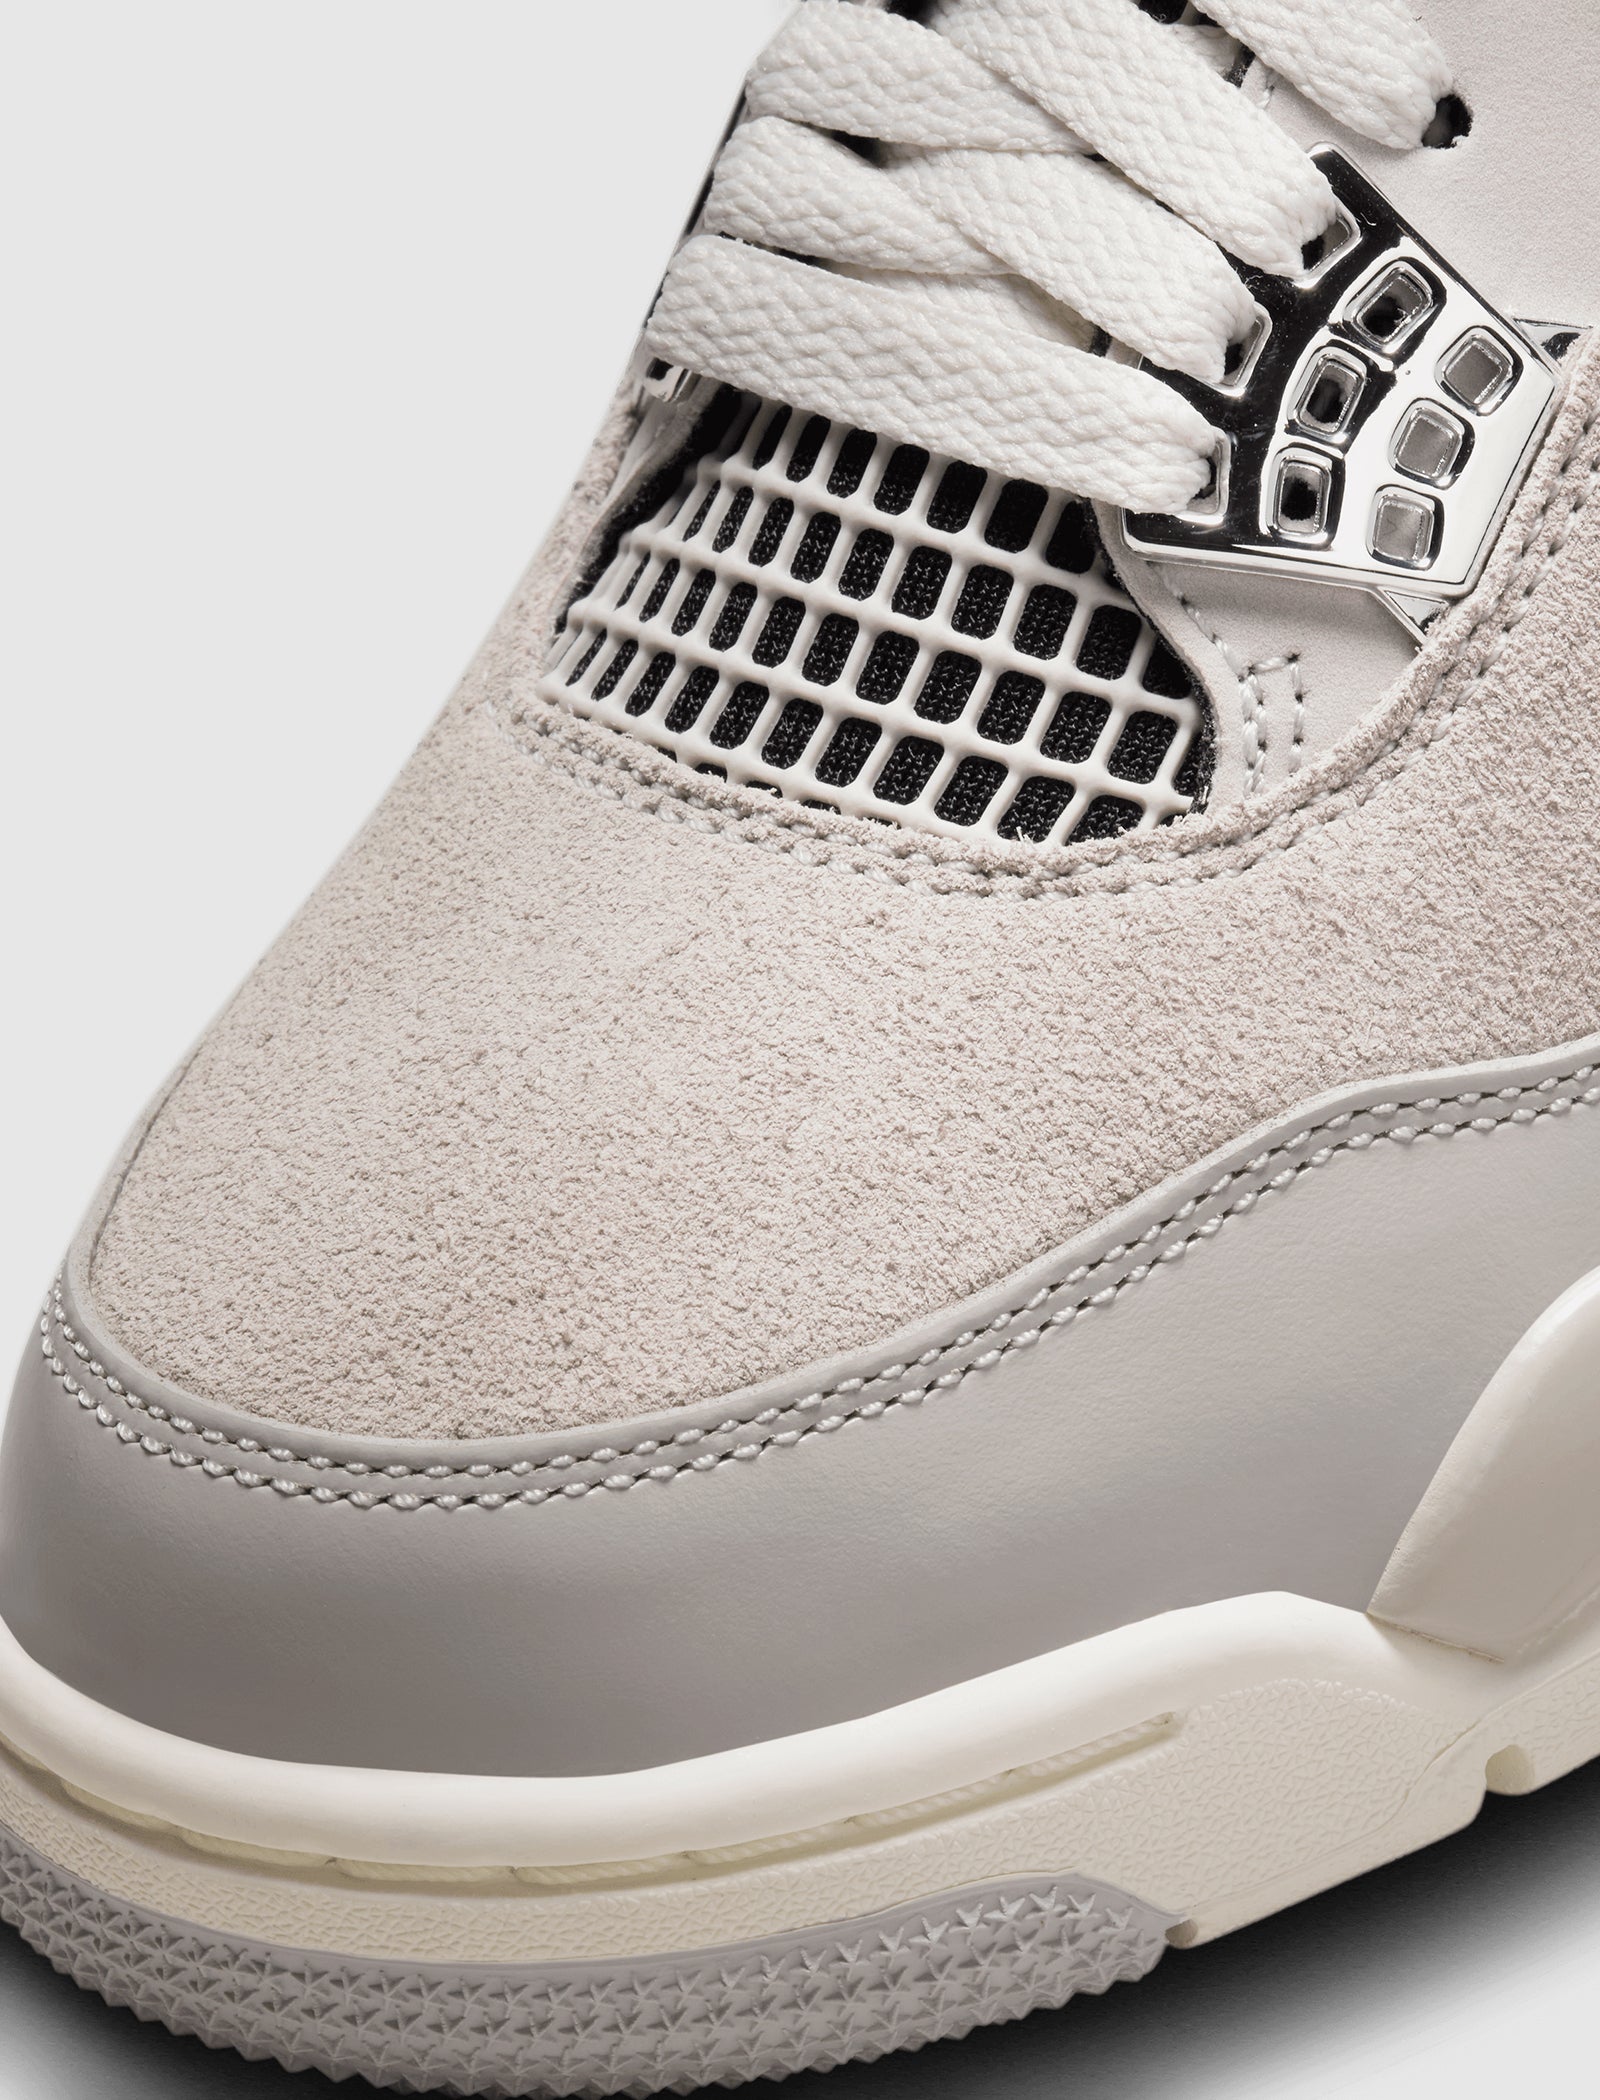 Nike Jordan 4 White Oreo - Size 10.5M